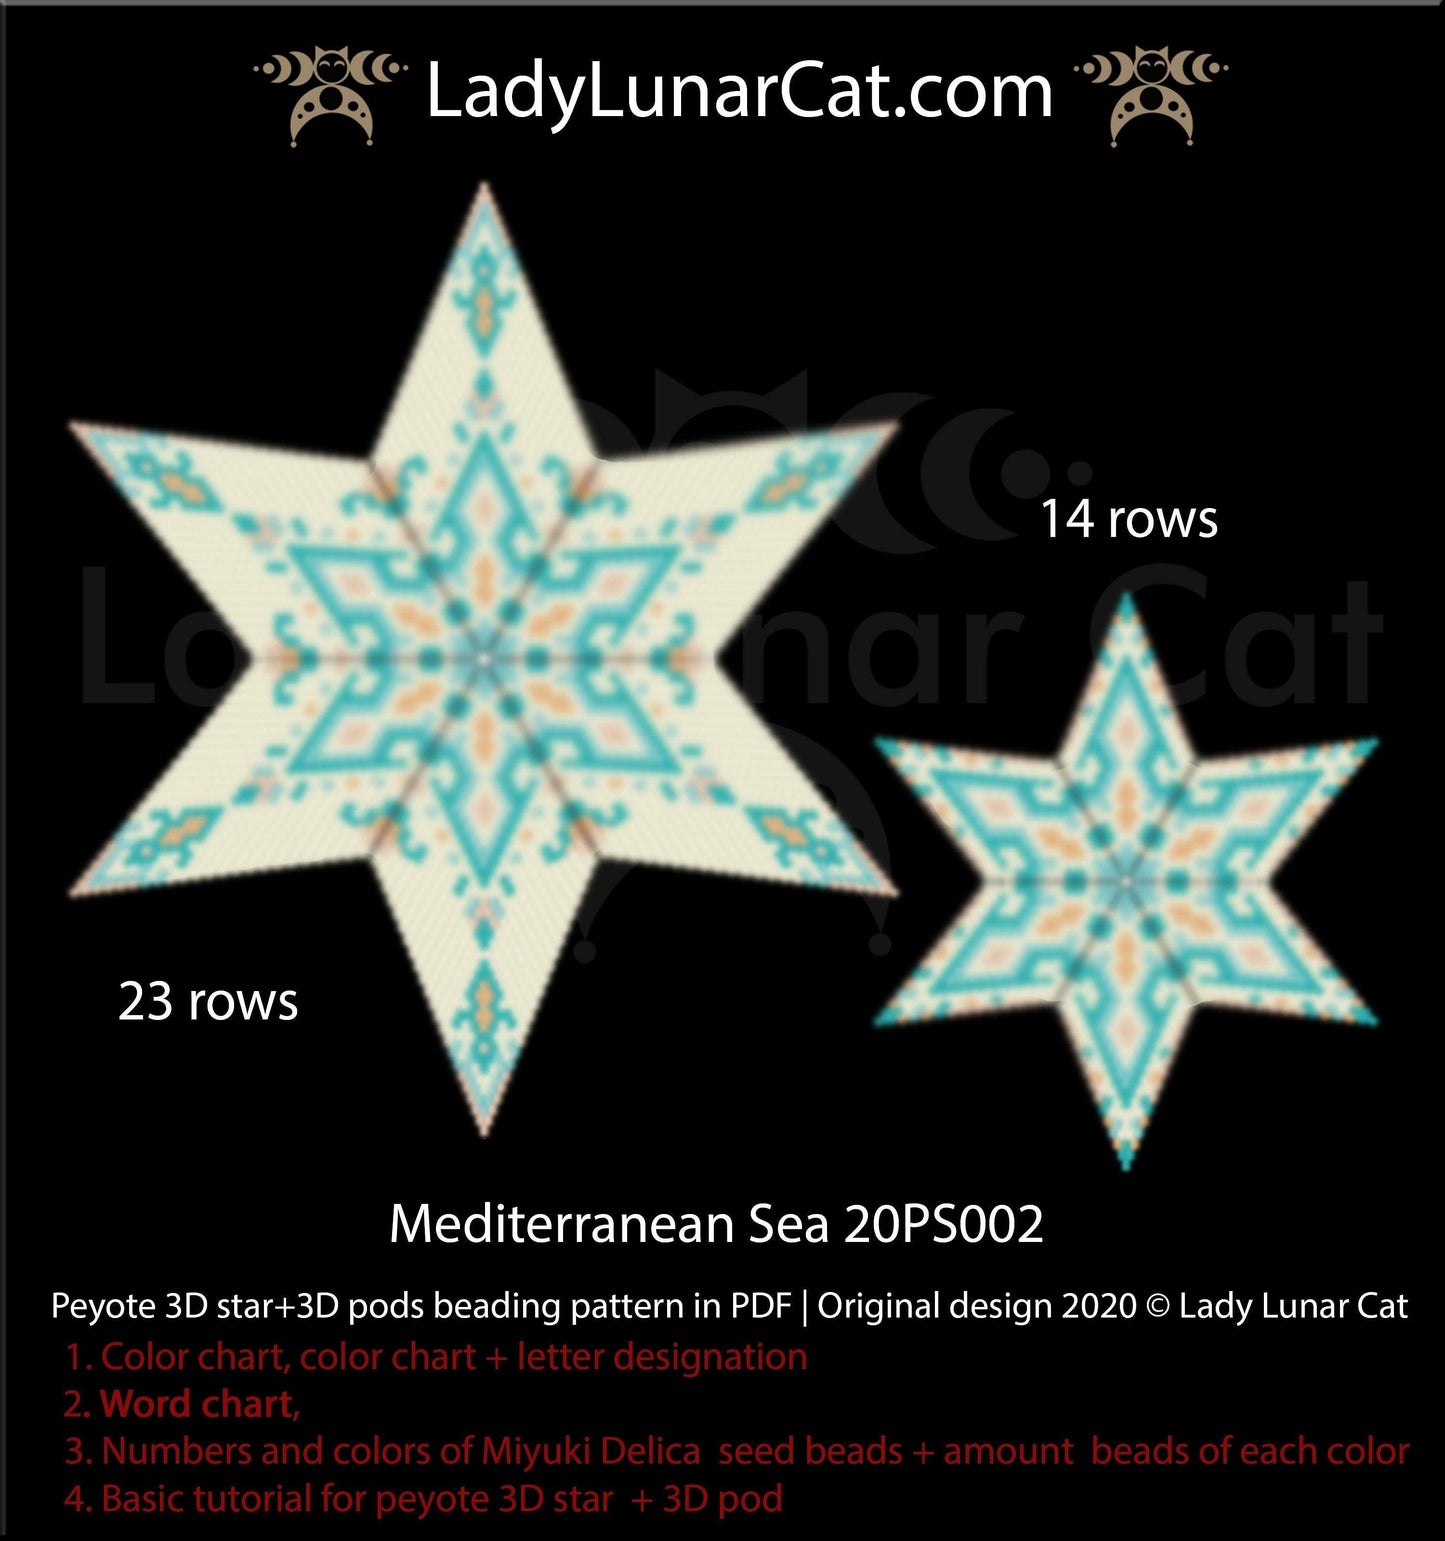 Peyote 3D star beading pattern Mediterranean Sea star 20PS002 LadyLunarCat